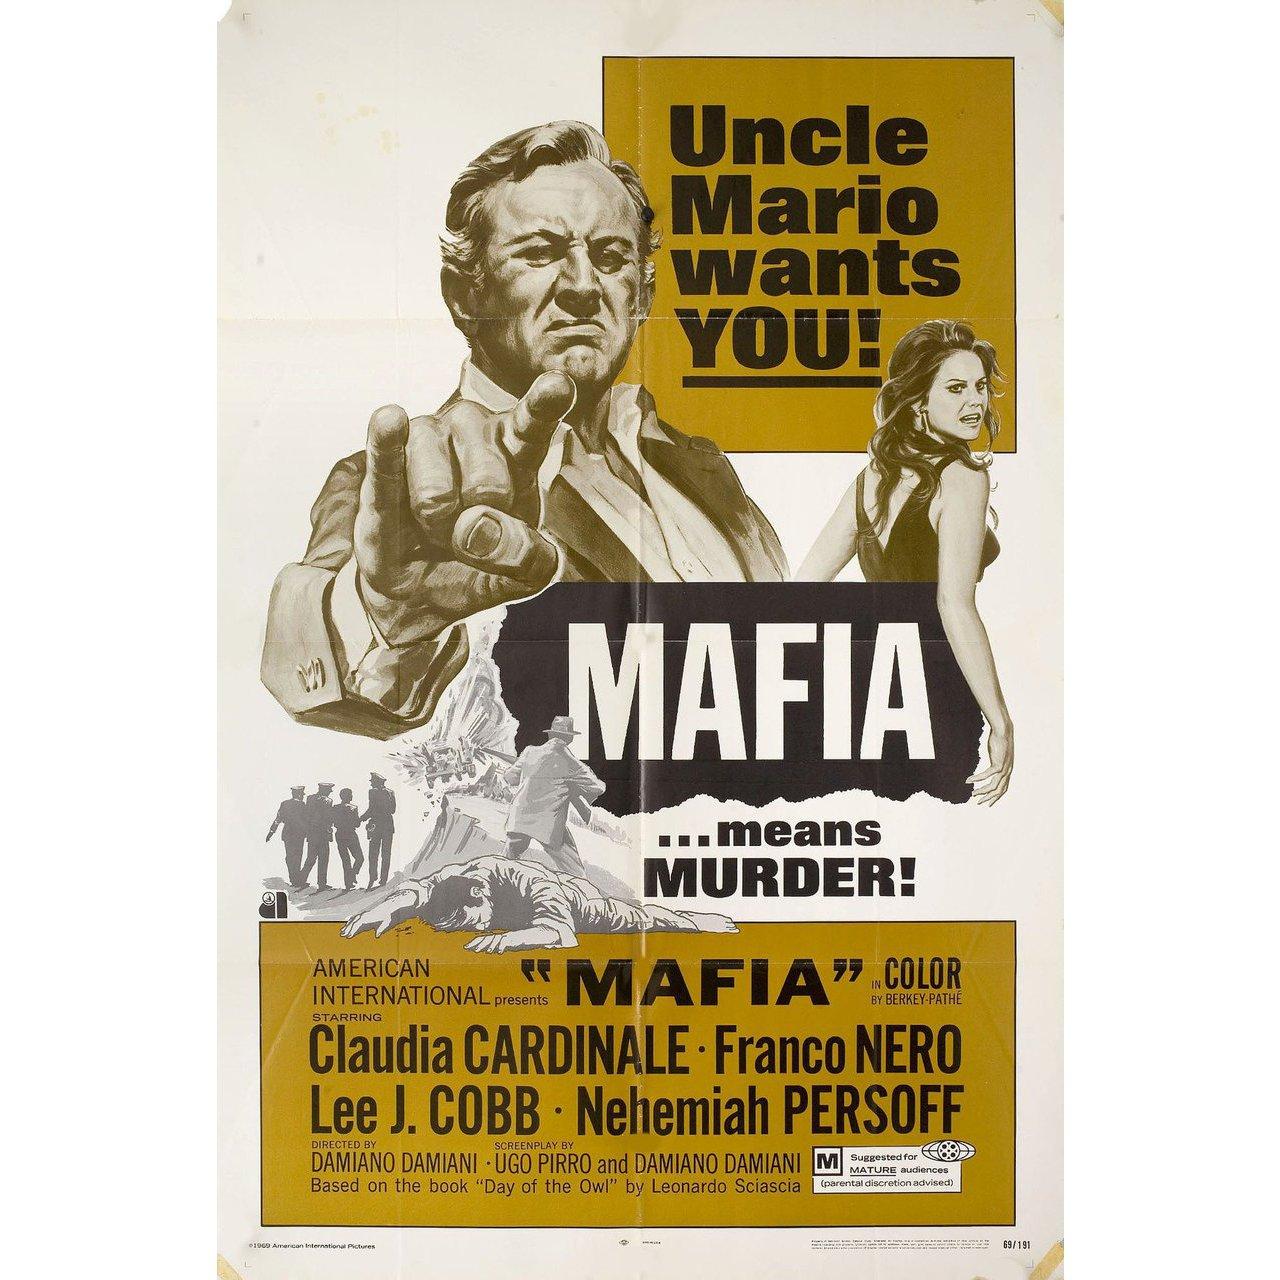 Original 1968 U.S. one sheet poster for the film Mafia (Il giorno della civetta) directed by Damiano Damiani with Claudia Cardinale / Franco Nero / Lee J. Cobb / Tano Cimarosa. Very good condition, folded. Many original posters were issued folded or